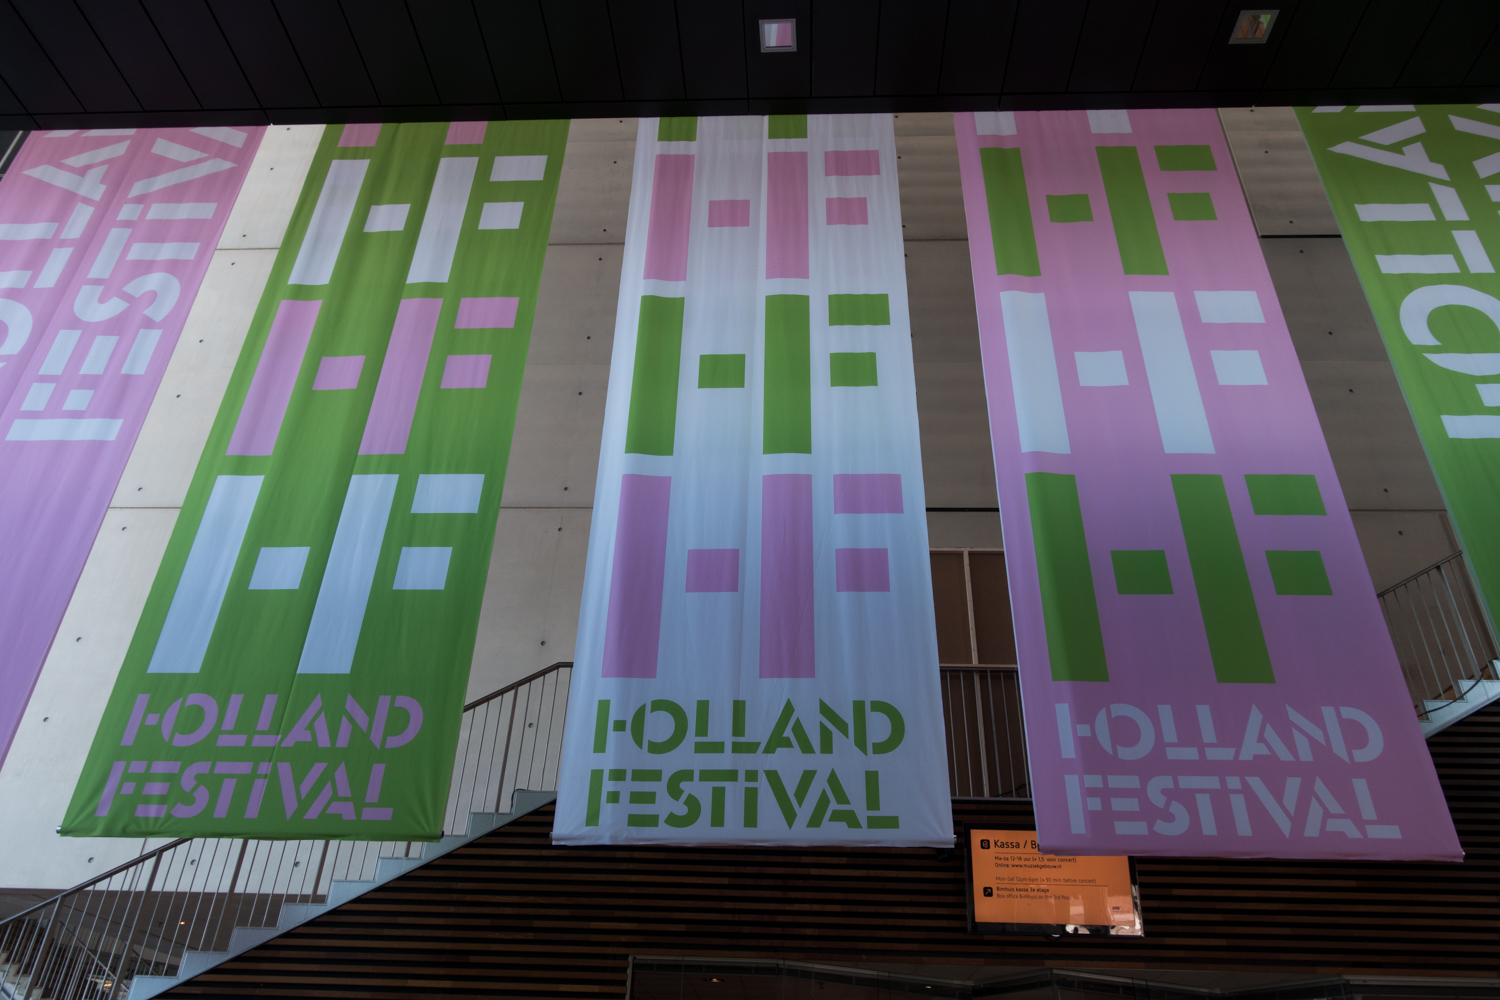   Inside the Muziekgebouw aan 't IJ during the Holland Festival in June 2015. Photo by Canan Marasligil  